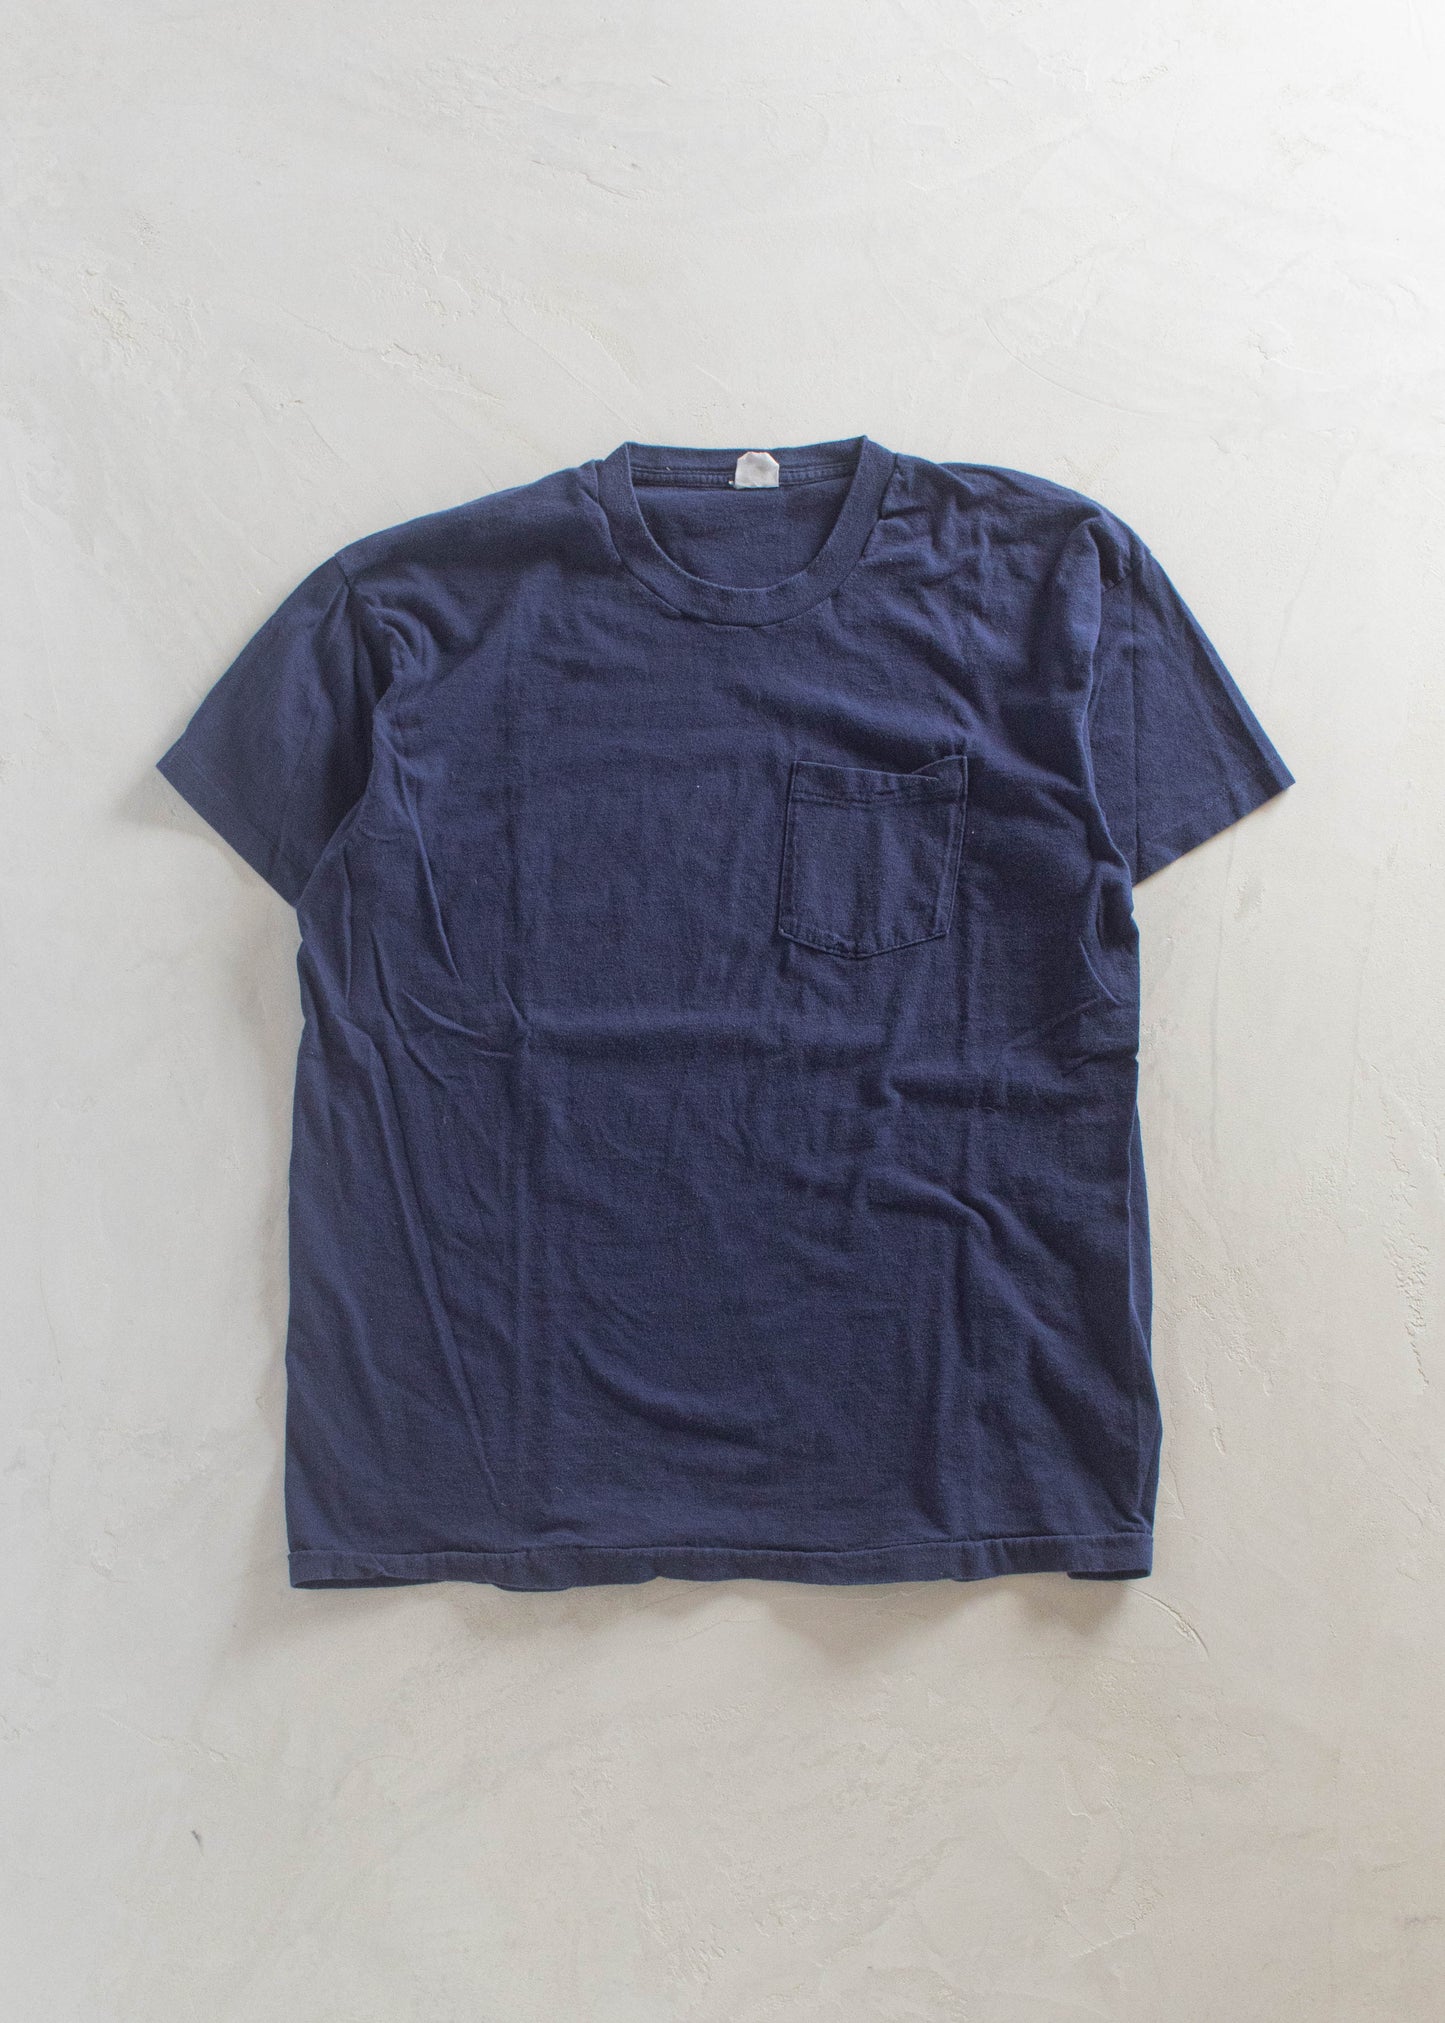 1980s Selvedge Pocket T-Shirt Size XL/2XL